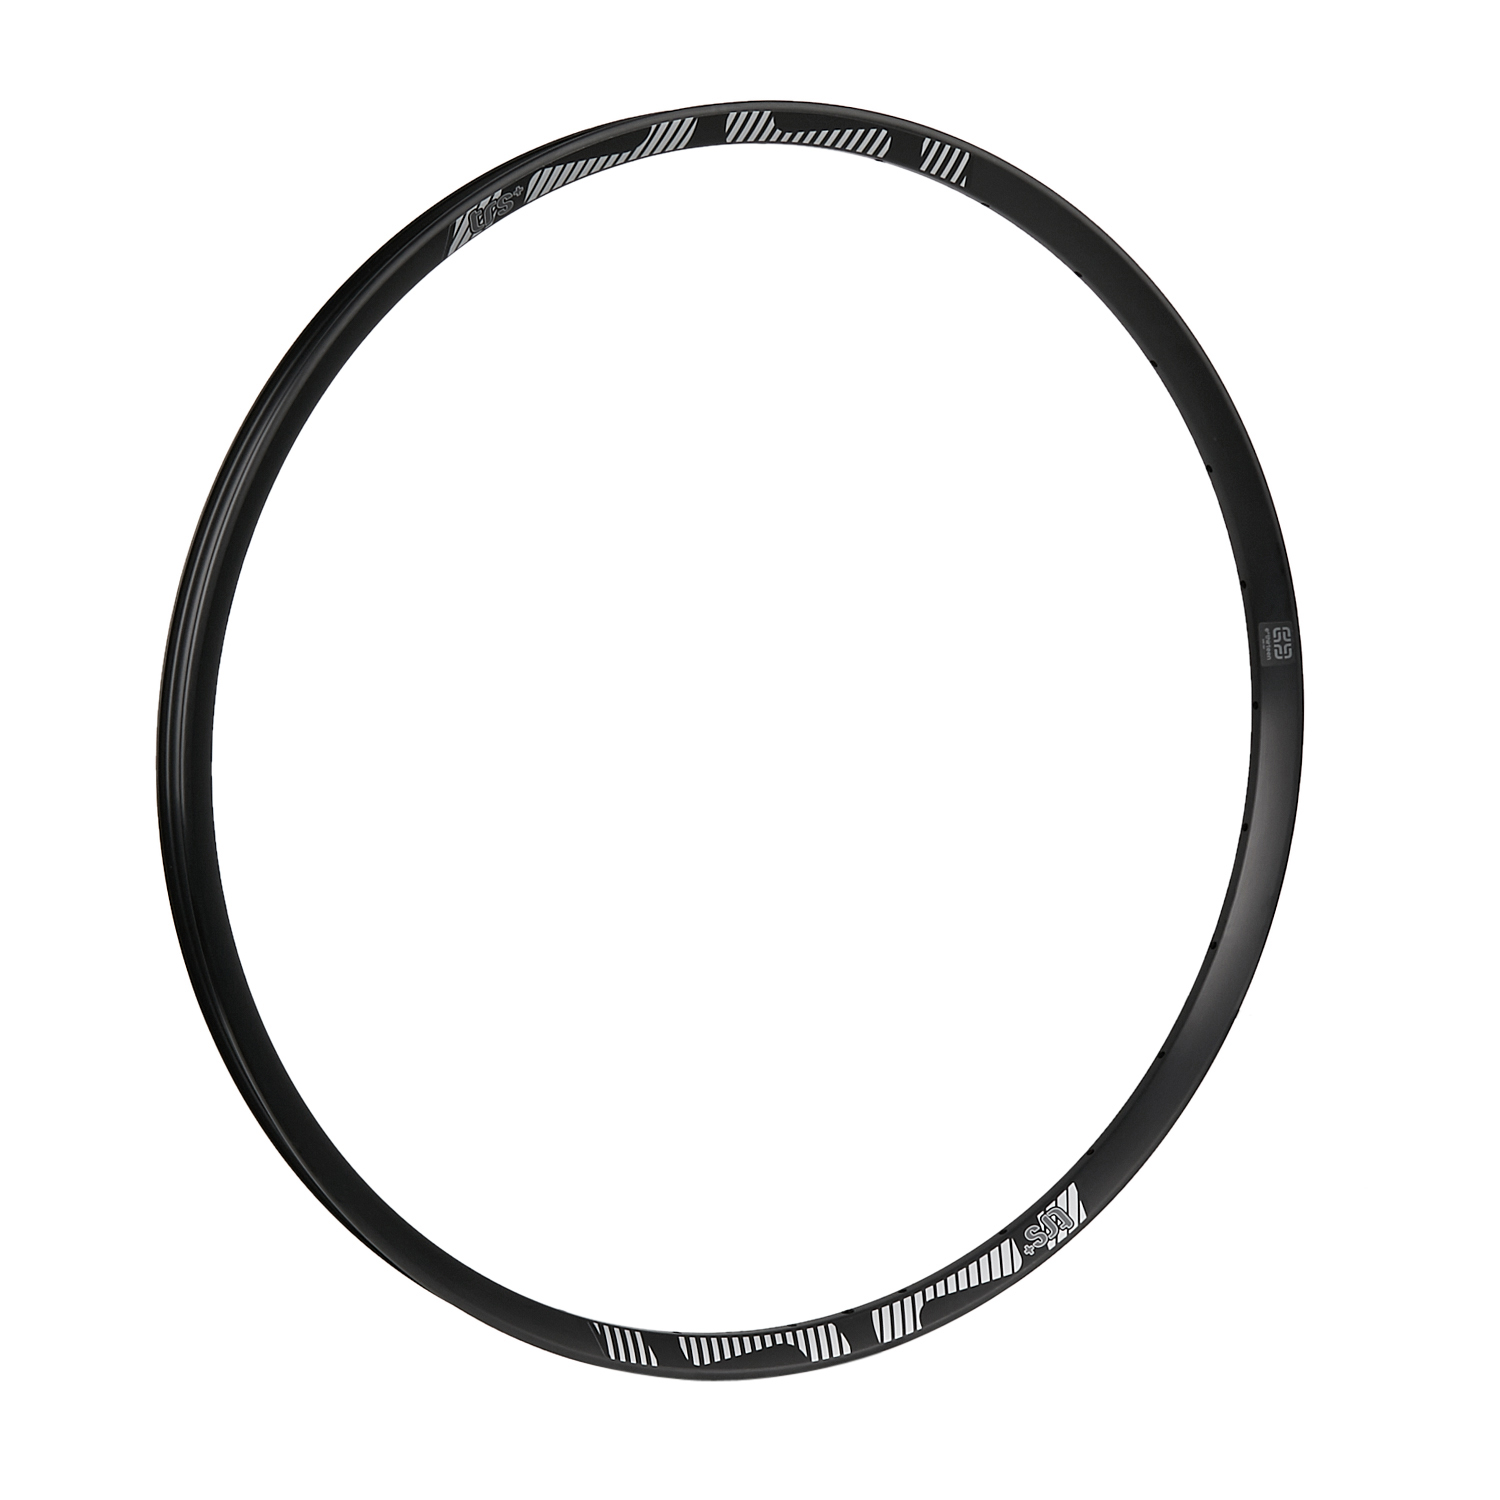 E*thirteen Cerchio MTB TRS+ Black, 27.5 Inches x 30 mm